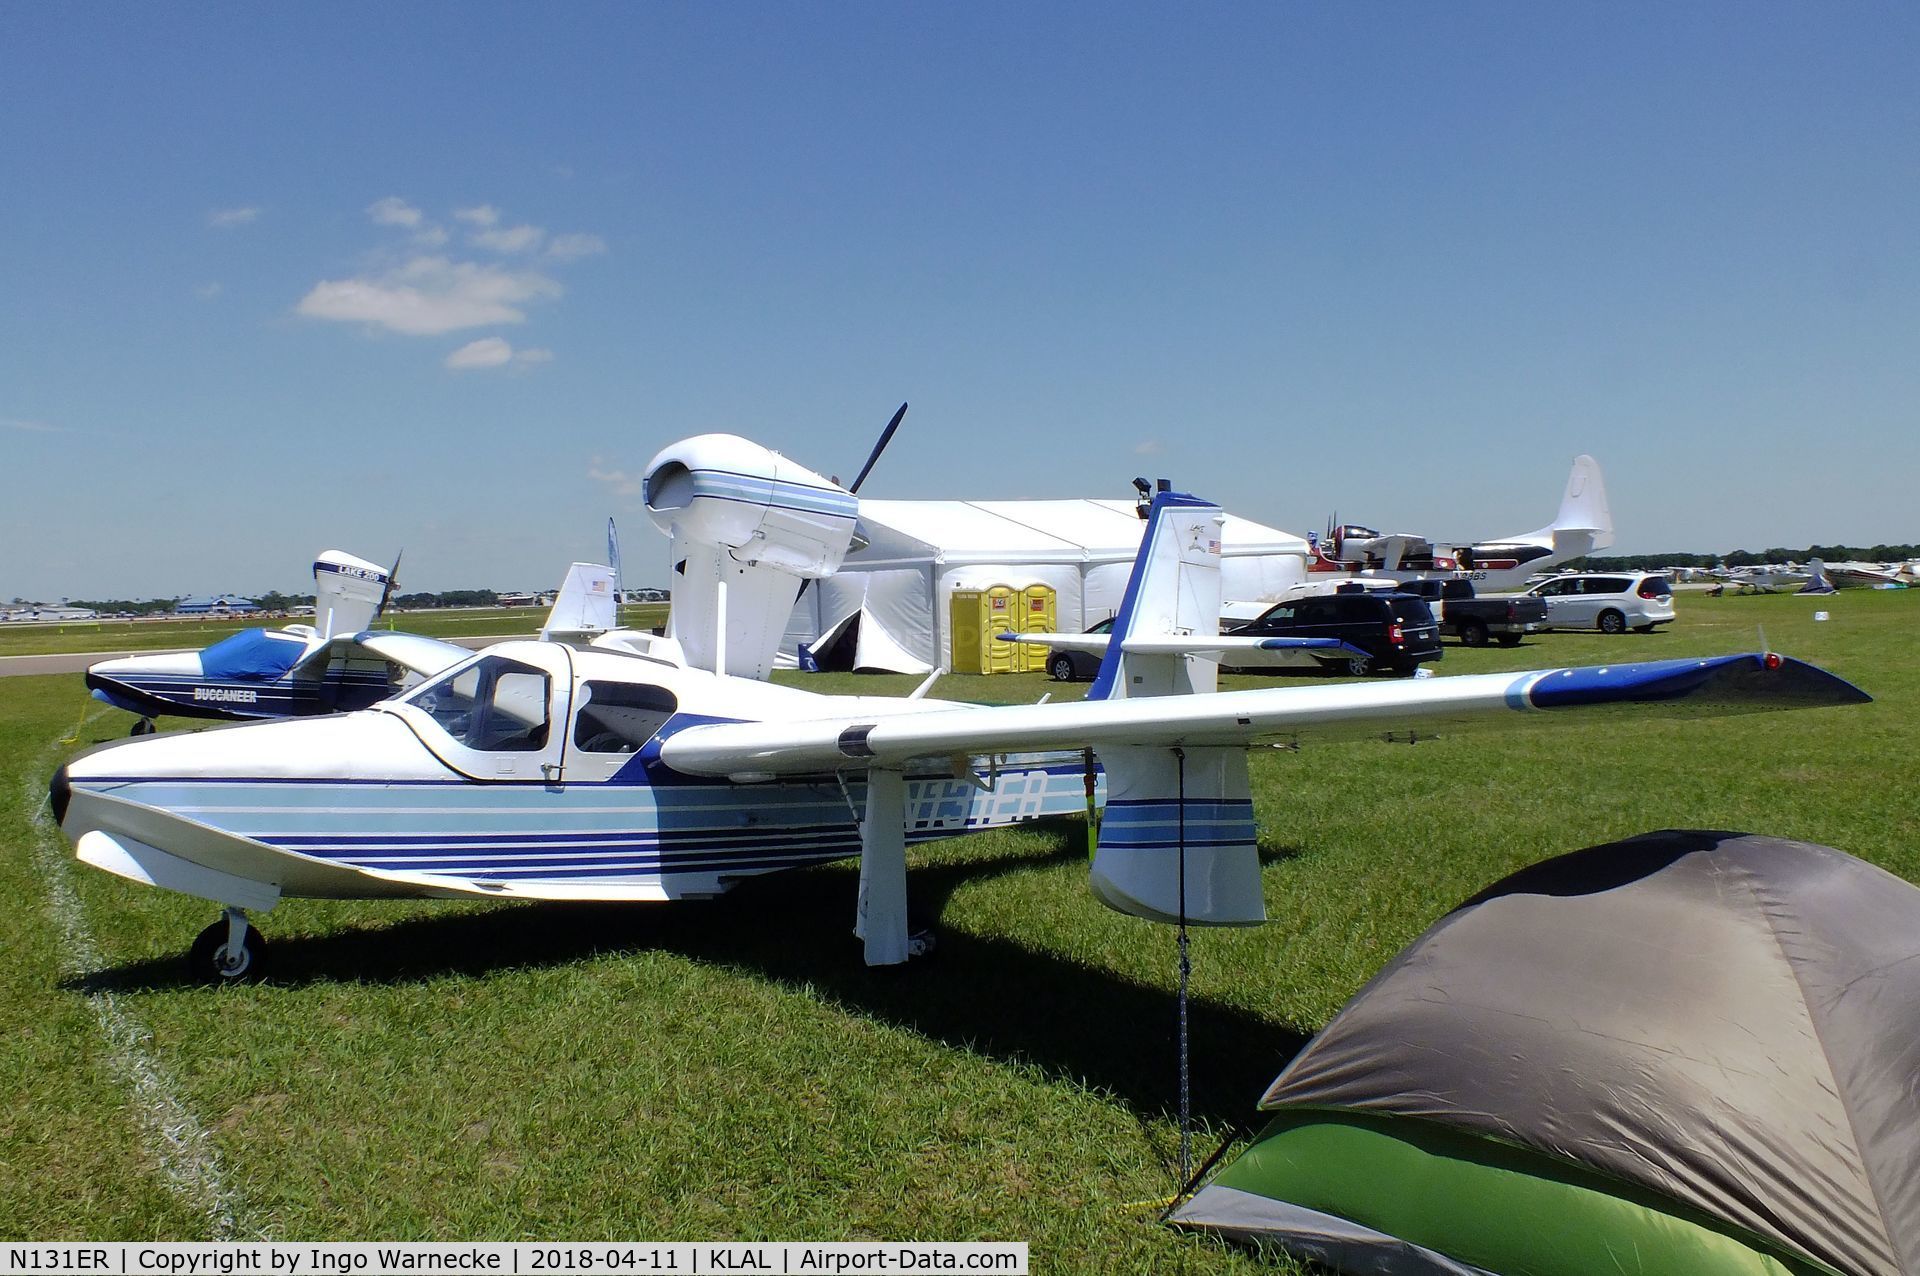 N131ER, 1984 Consolidated Aeronautics Inc. Lake LA-4-200 C/N 940, Lake LA-4-200 Buccaneer at 2018 Sun 'n Fun, Lakeland FL